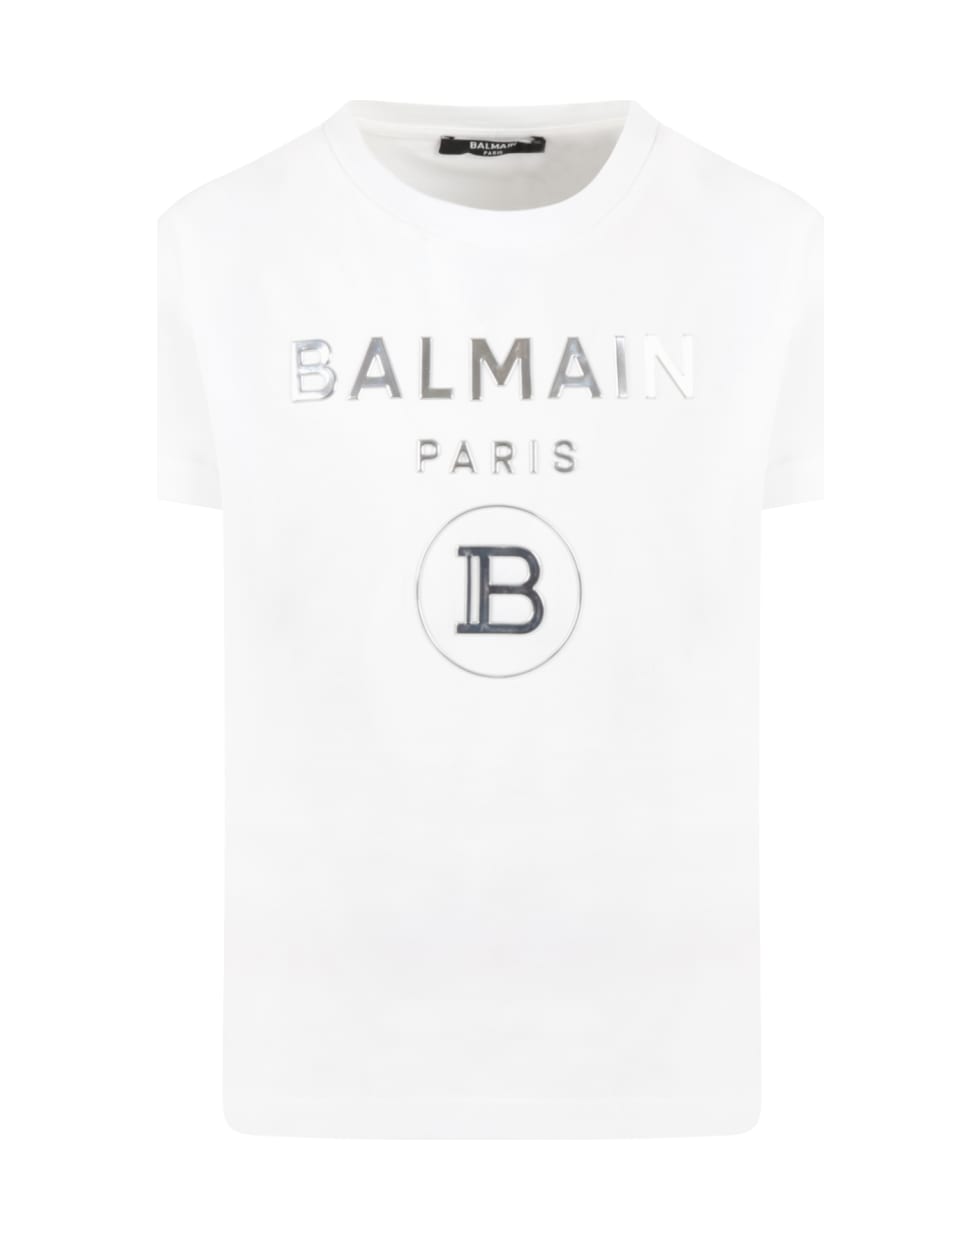 Balmain White T-shirt For Kids With Silver Logo - White